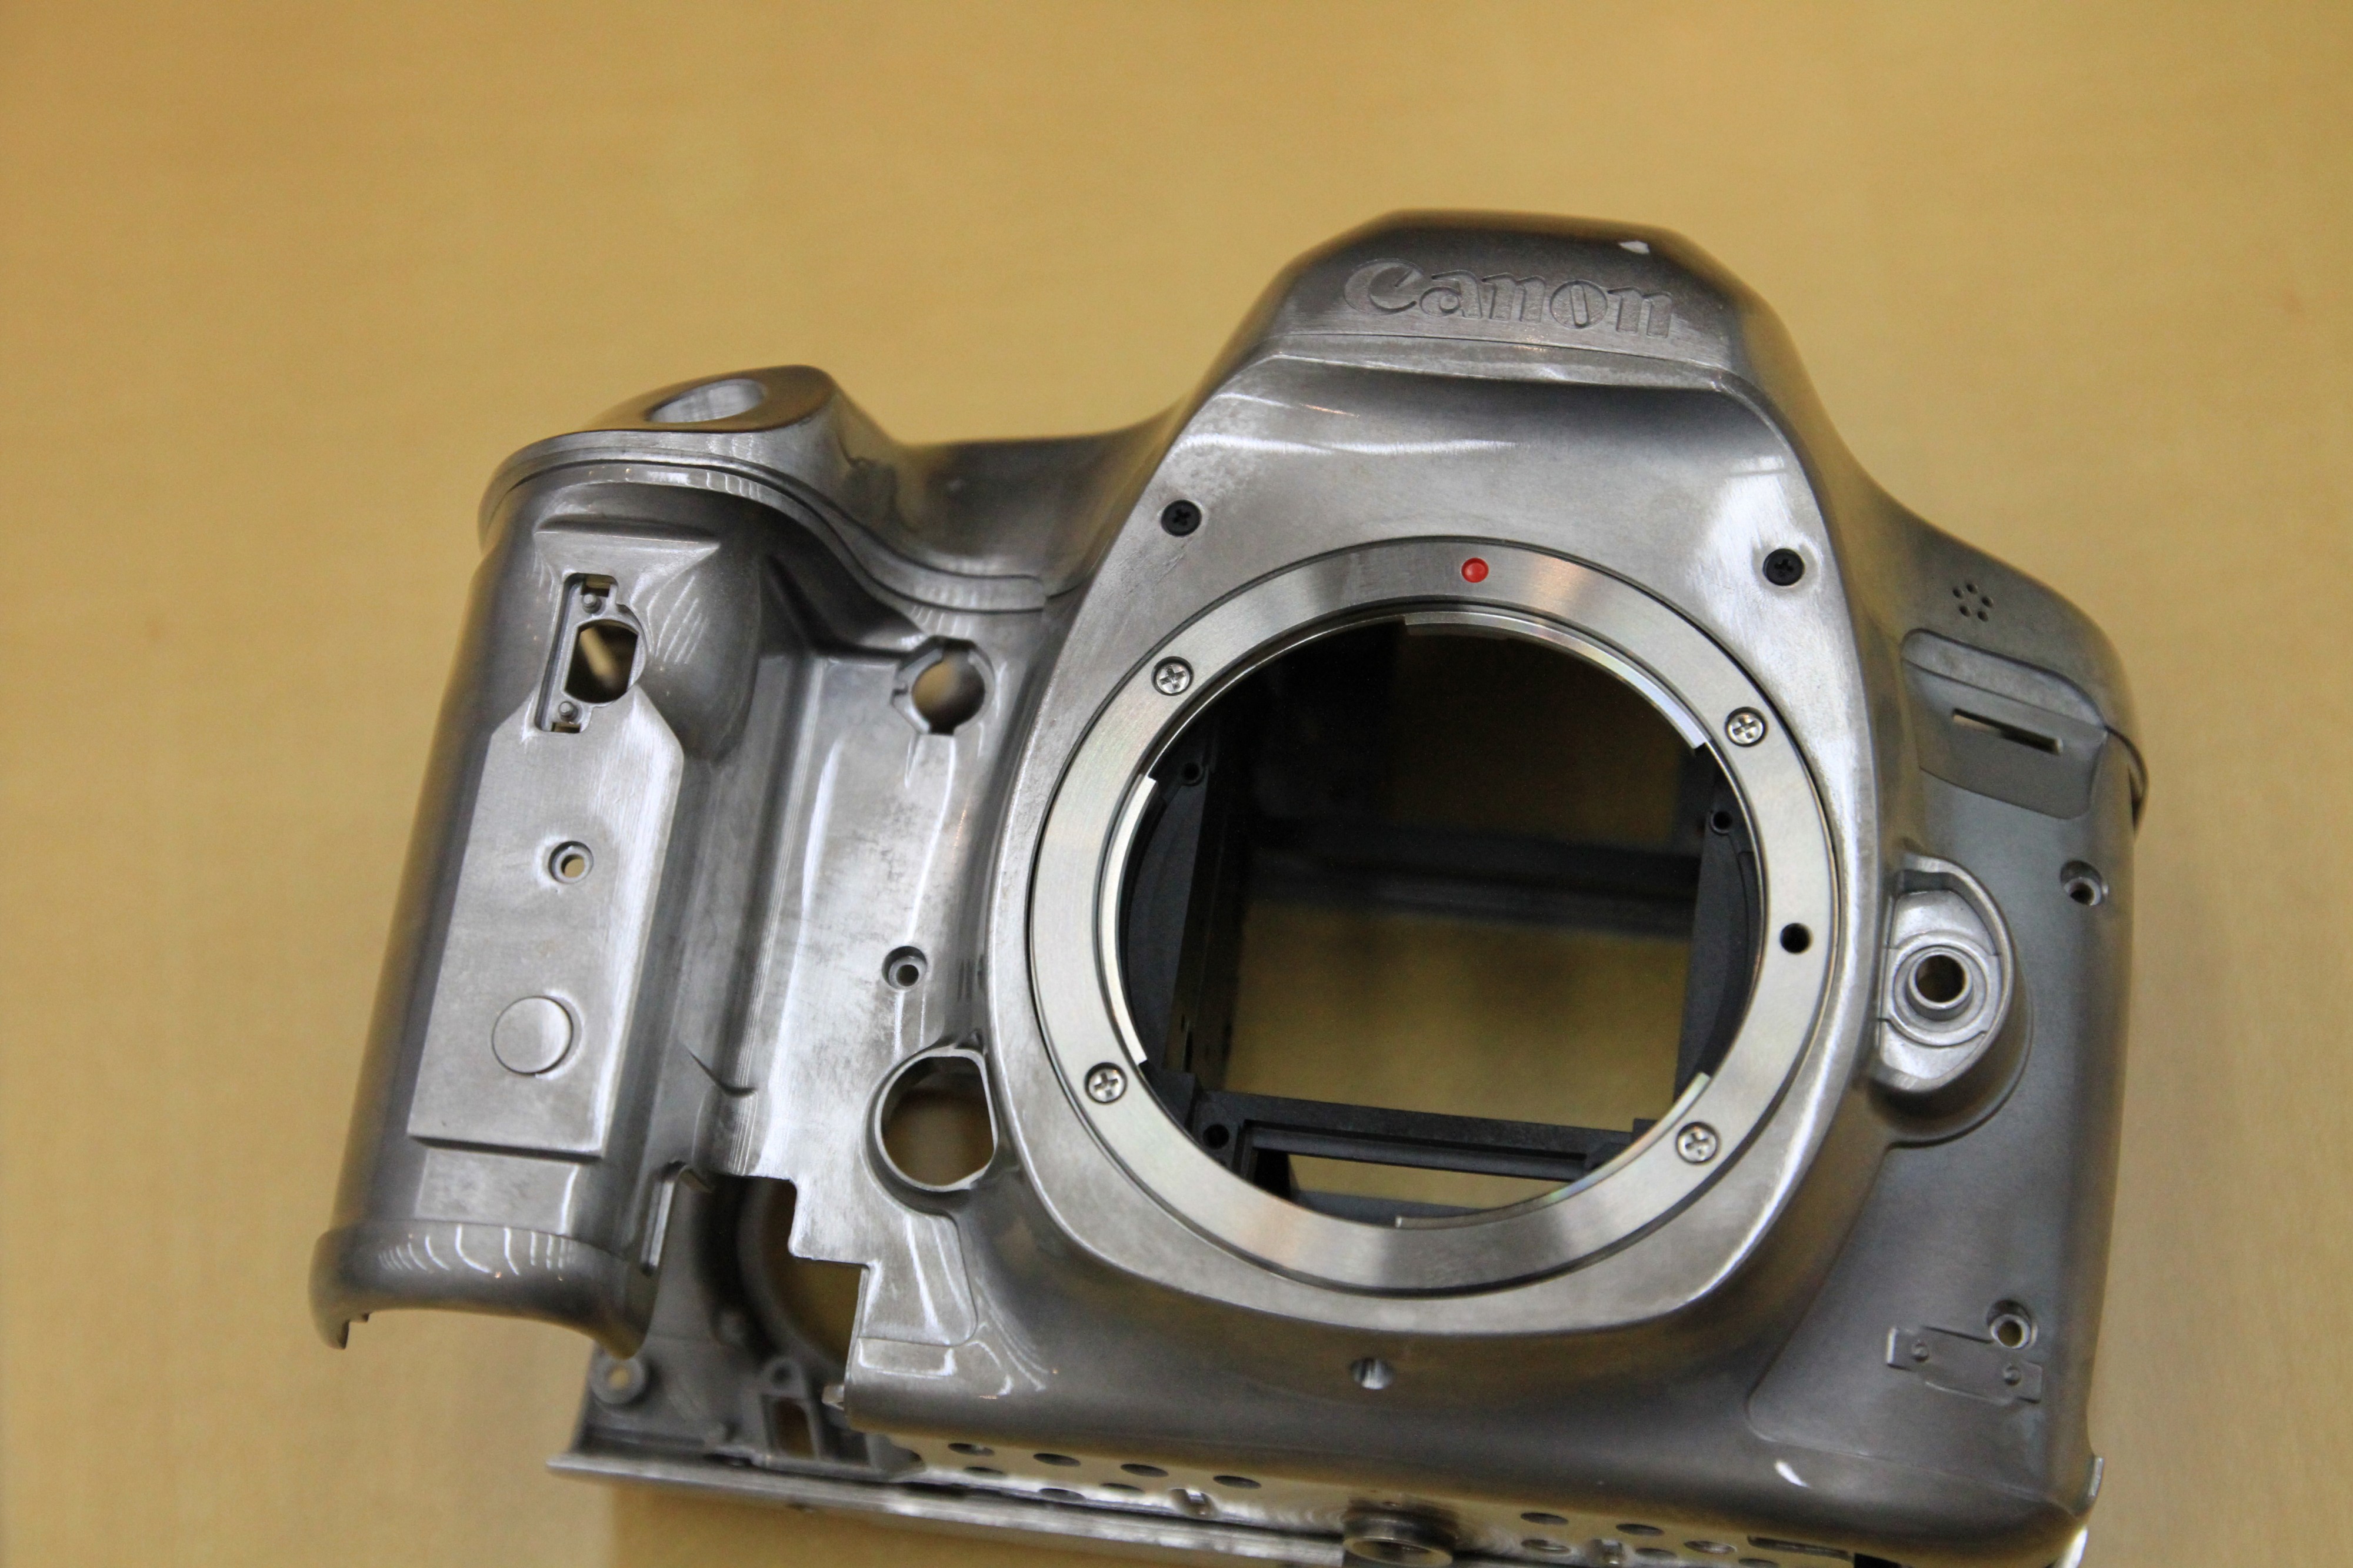 Canon EOS 5D Mark III 17